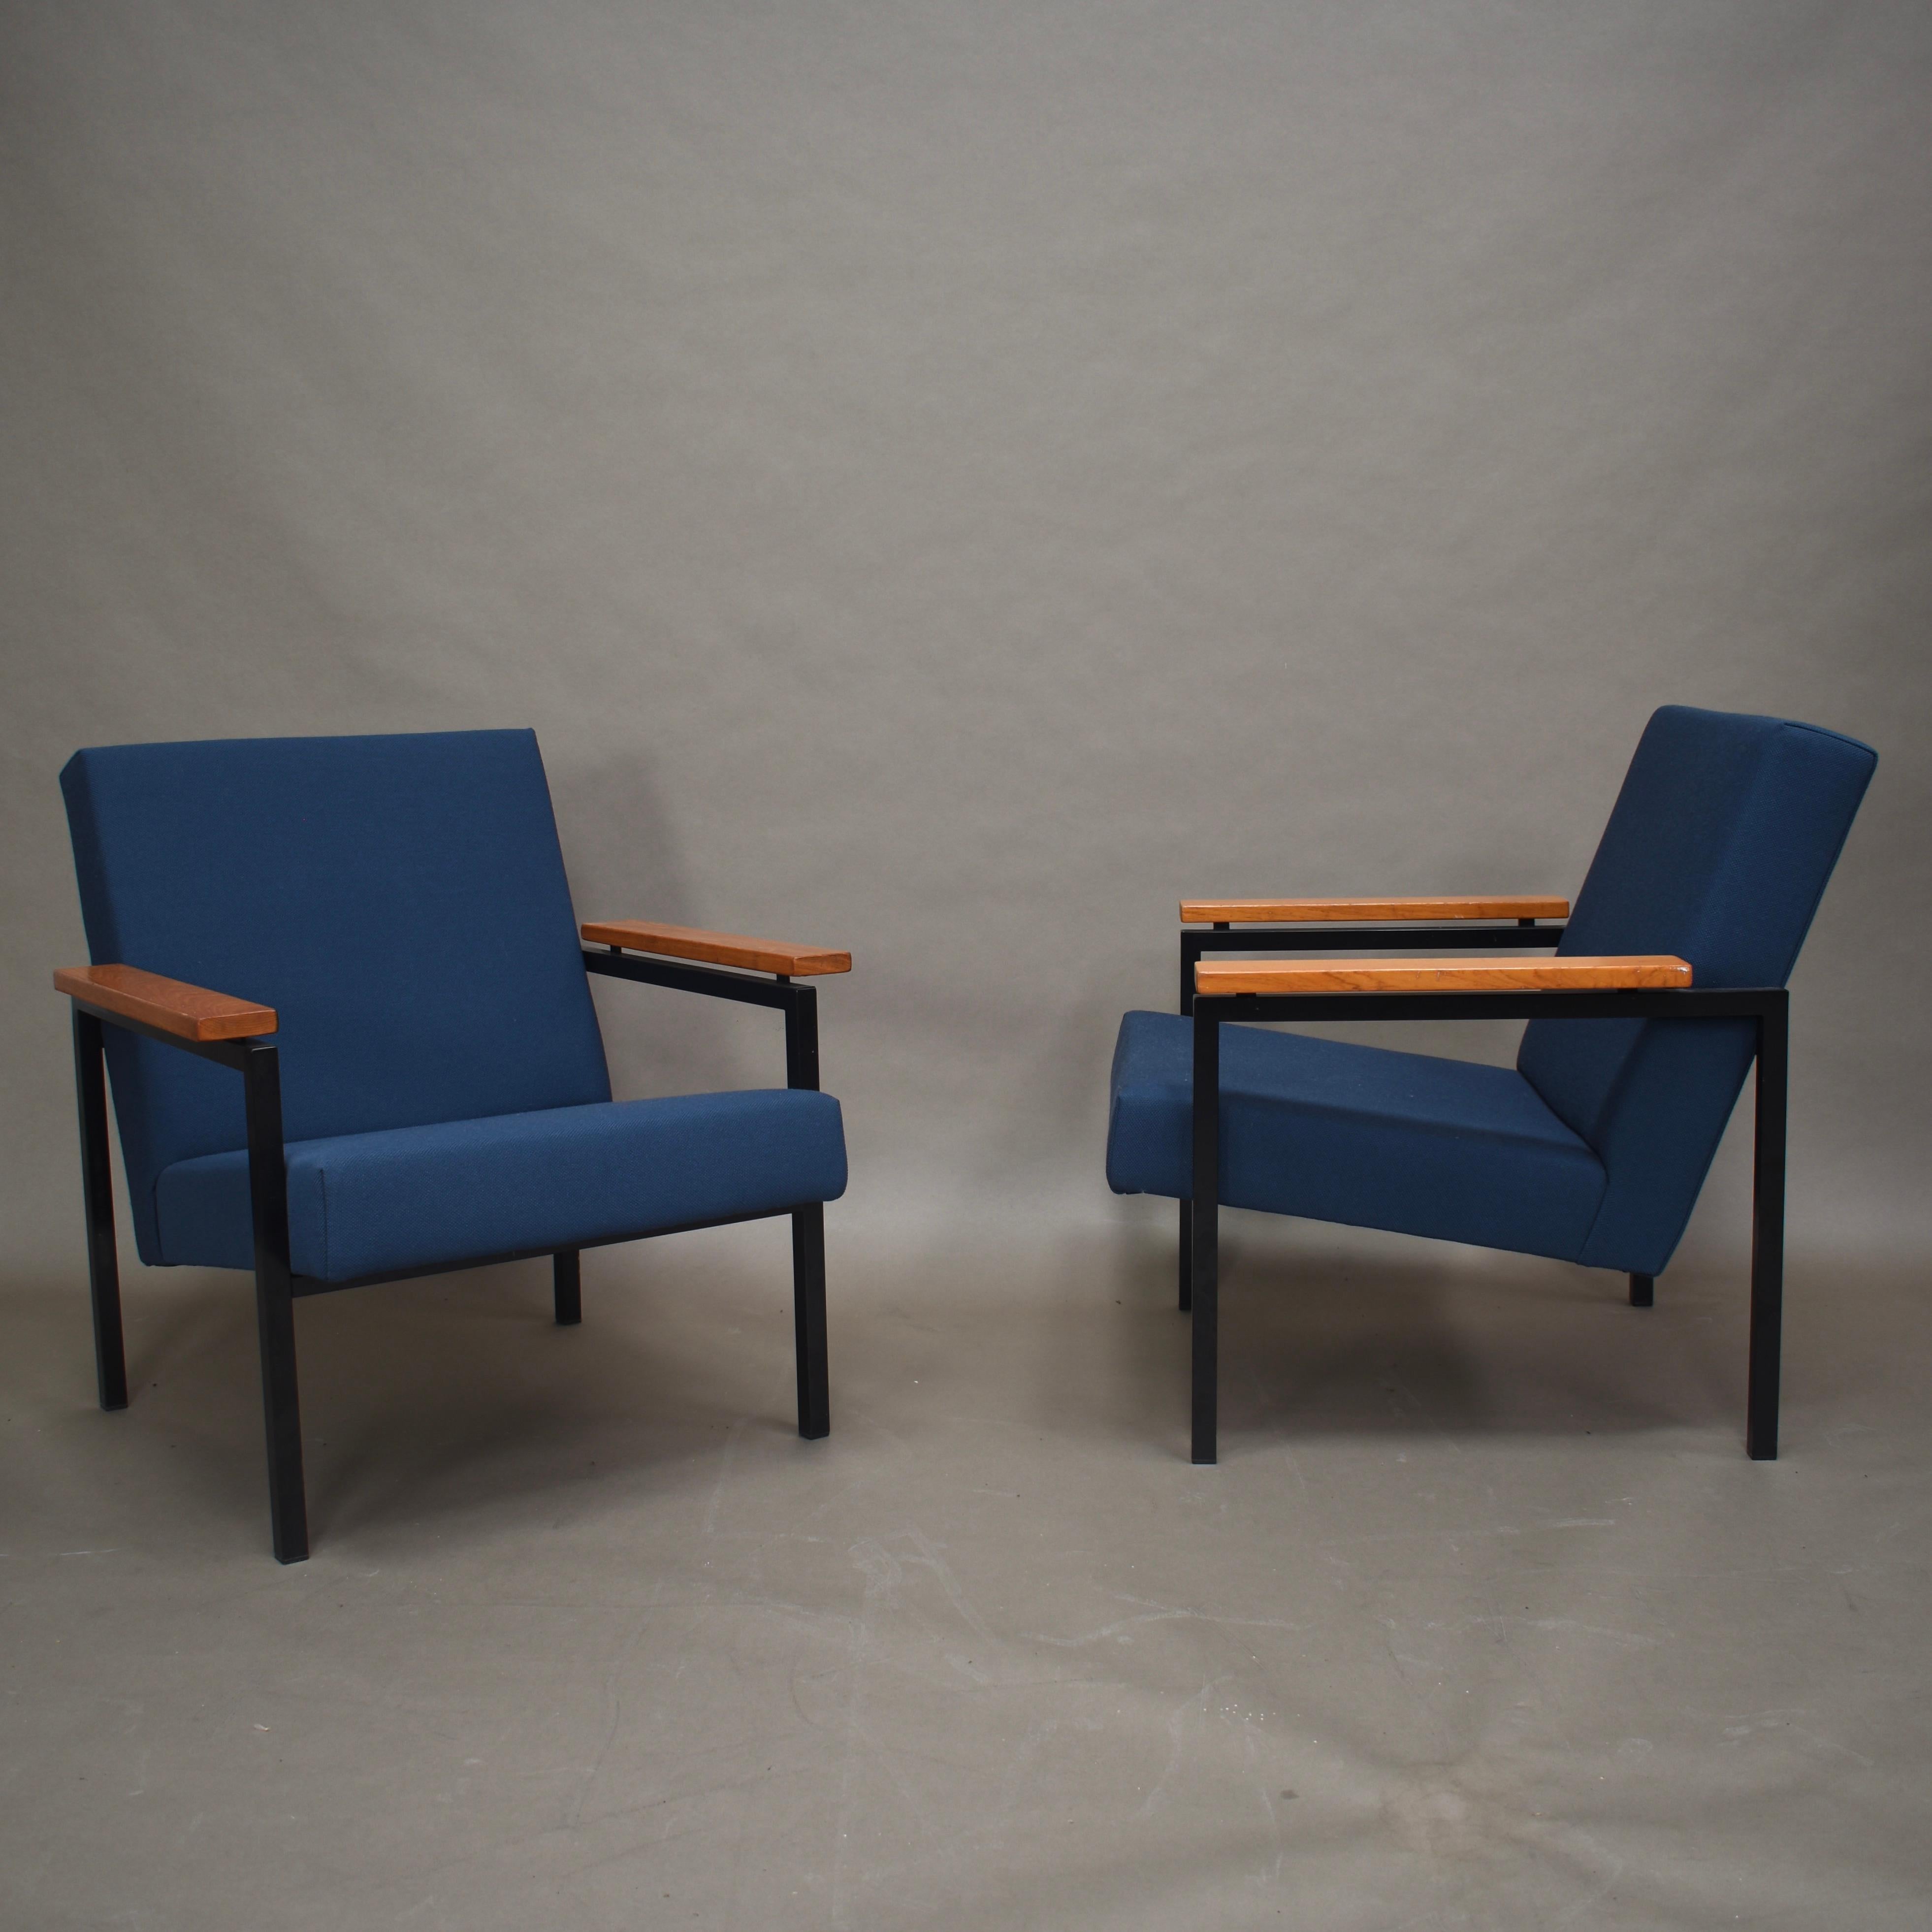 Mid-20th Century Pair of Gijs van der Sluis Chairs in New Upholstery, Netherlands, circa 1960